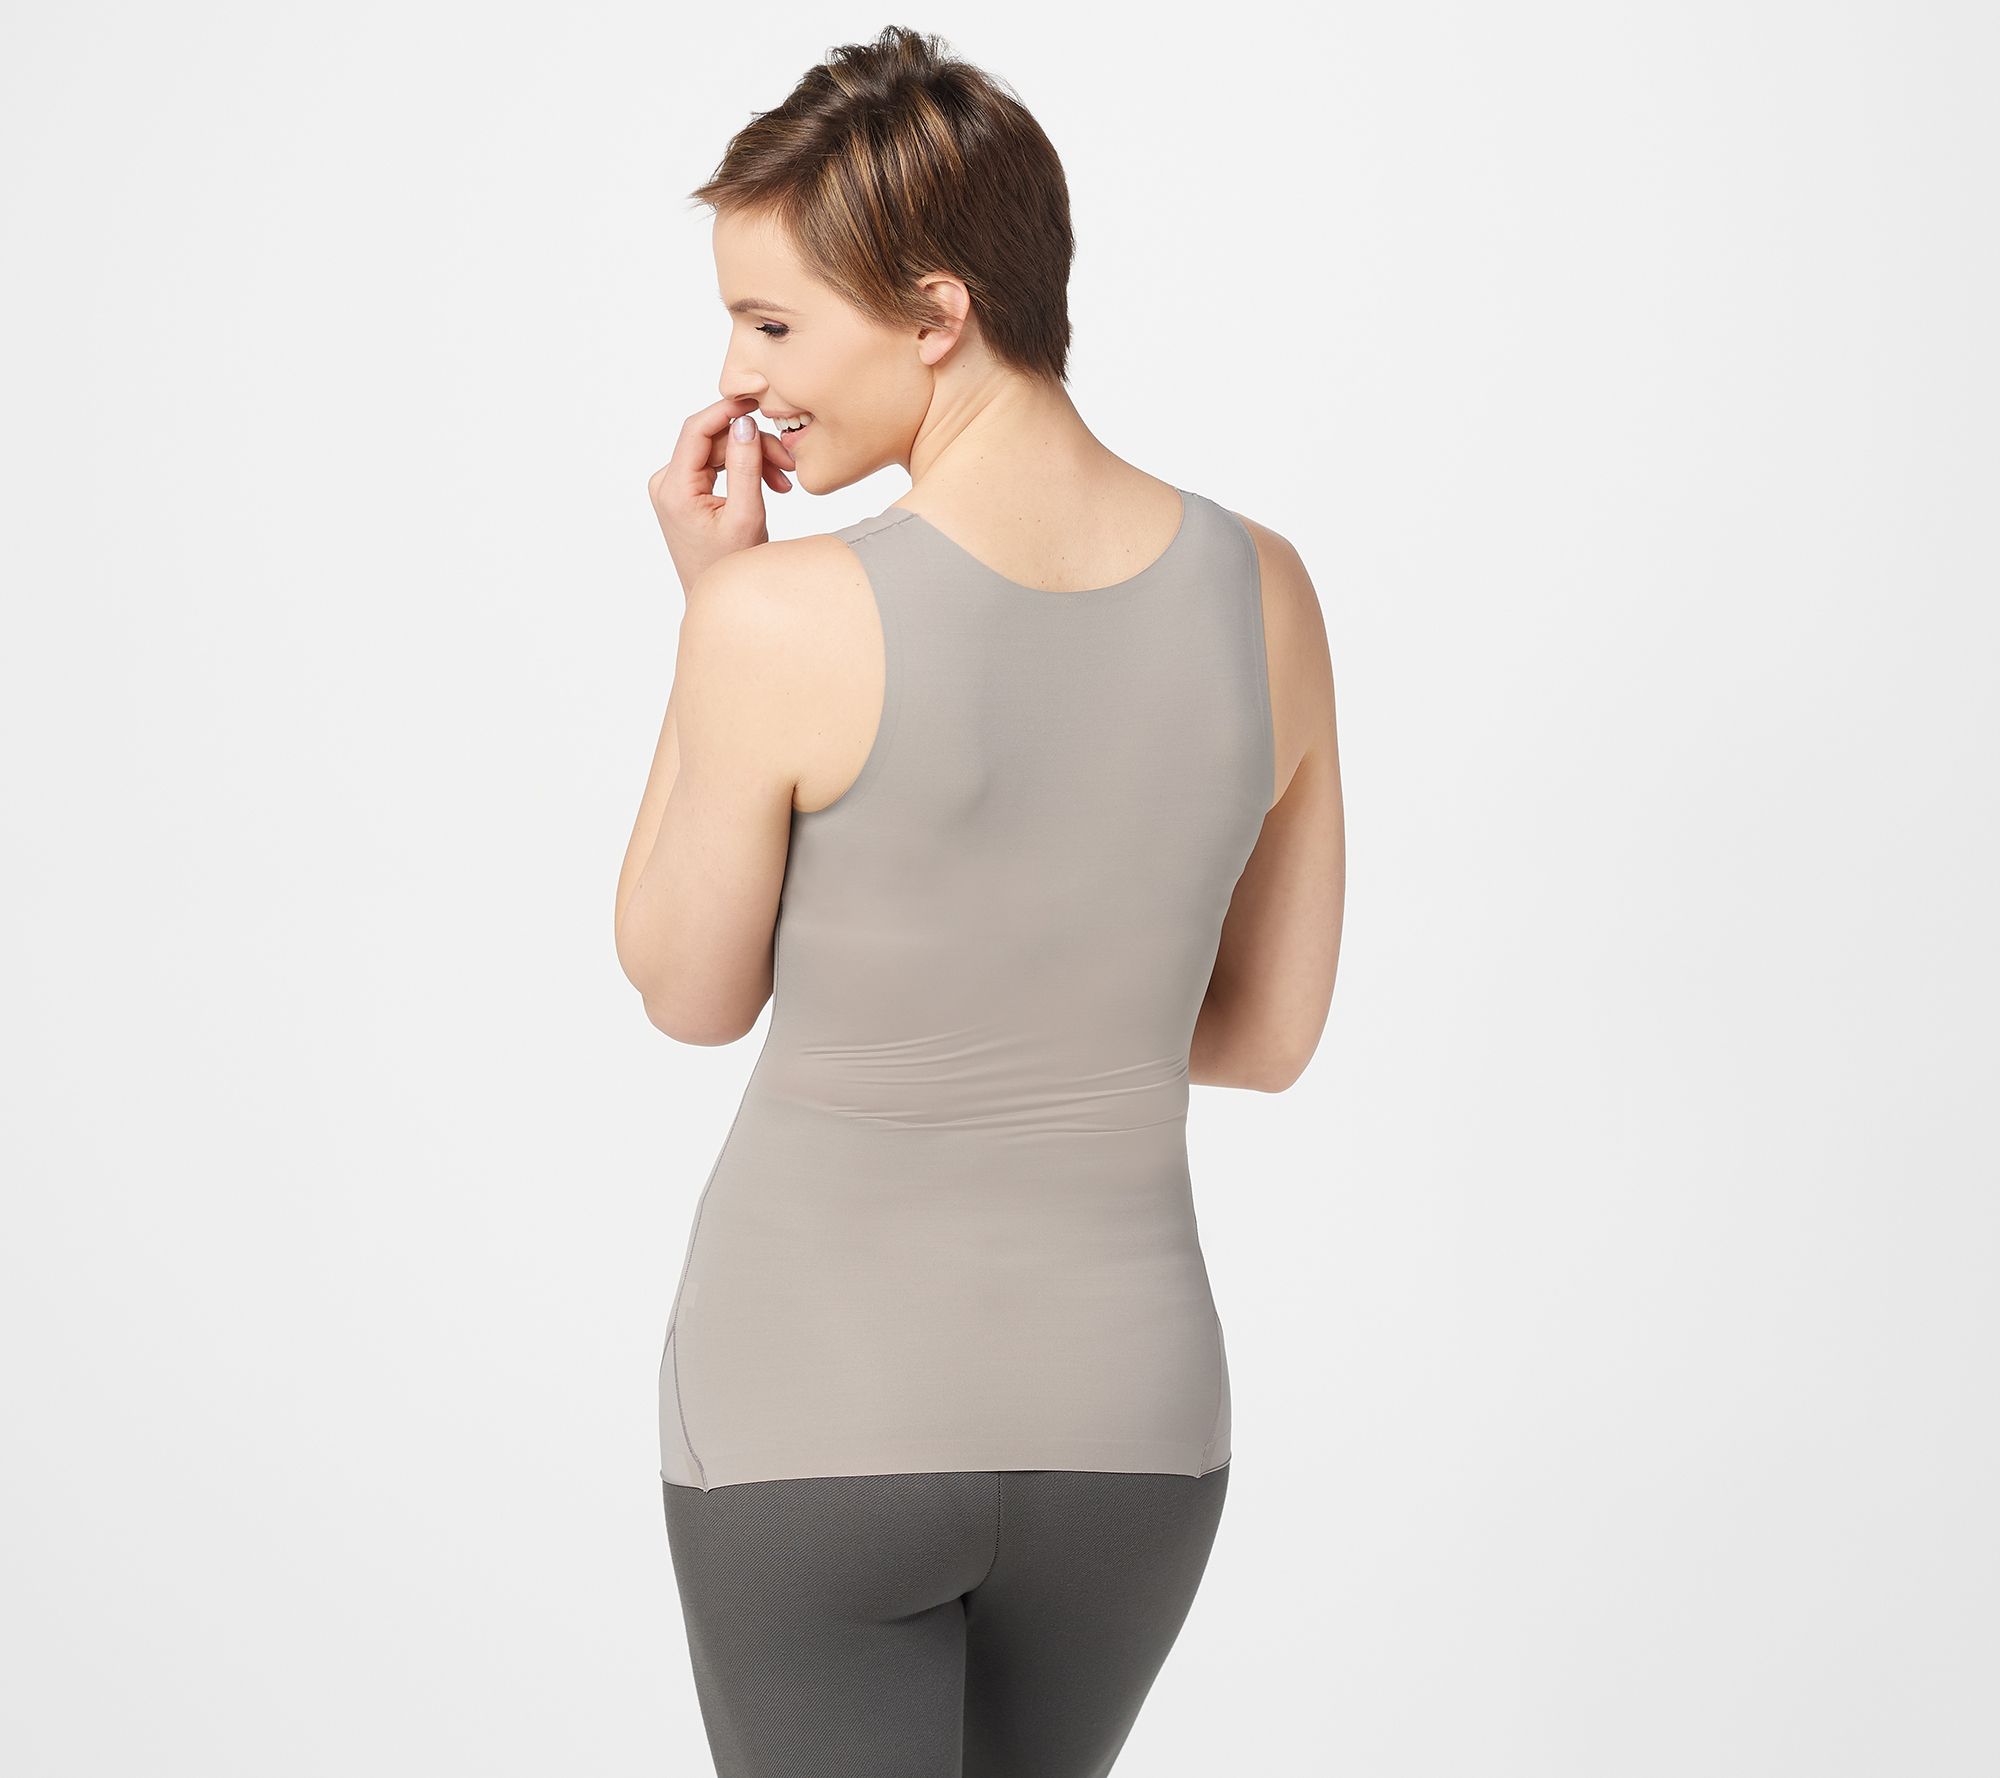 Spanx Shirt Women's Medium Tan Tank Top Sleeveless Slimming